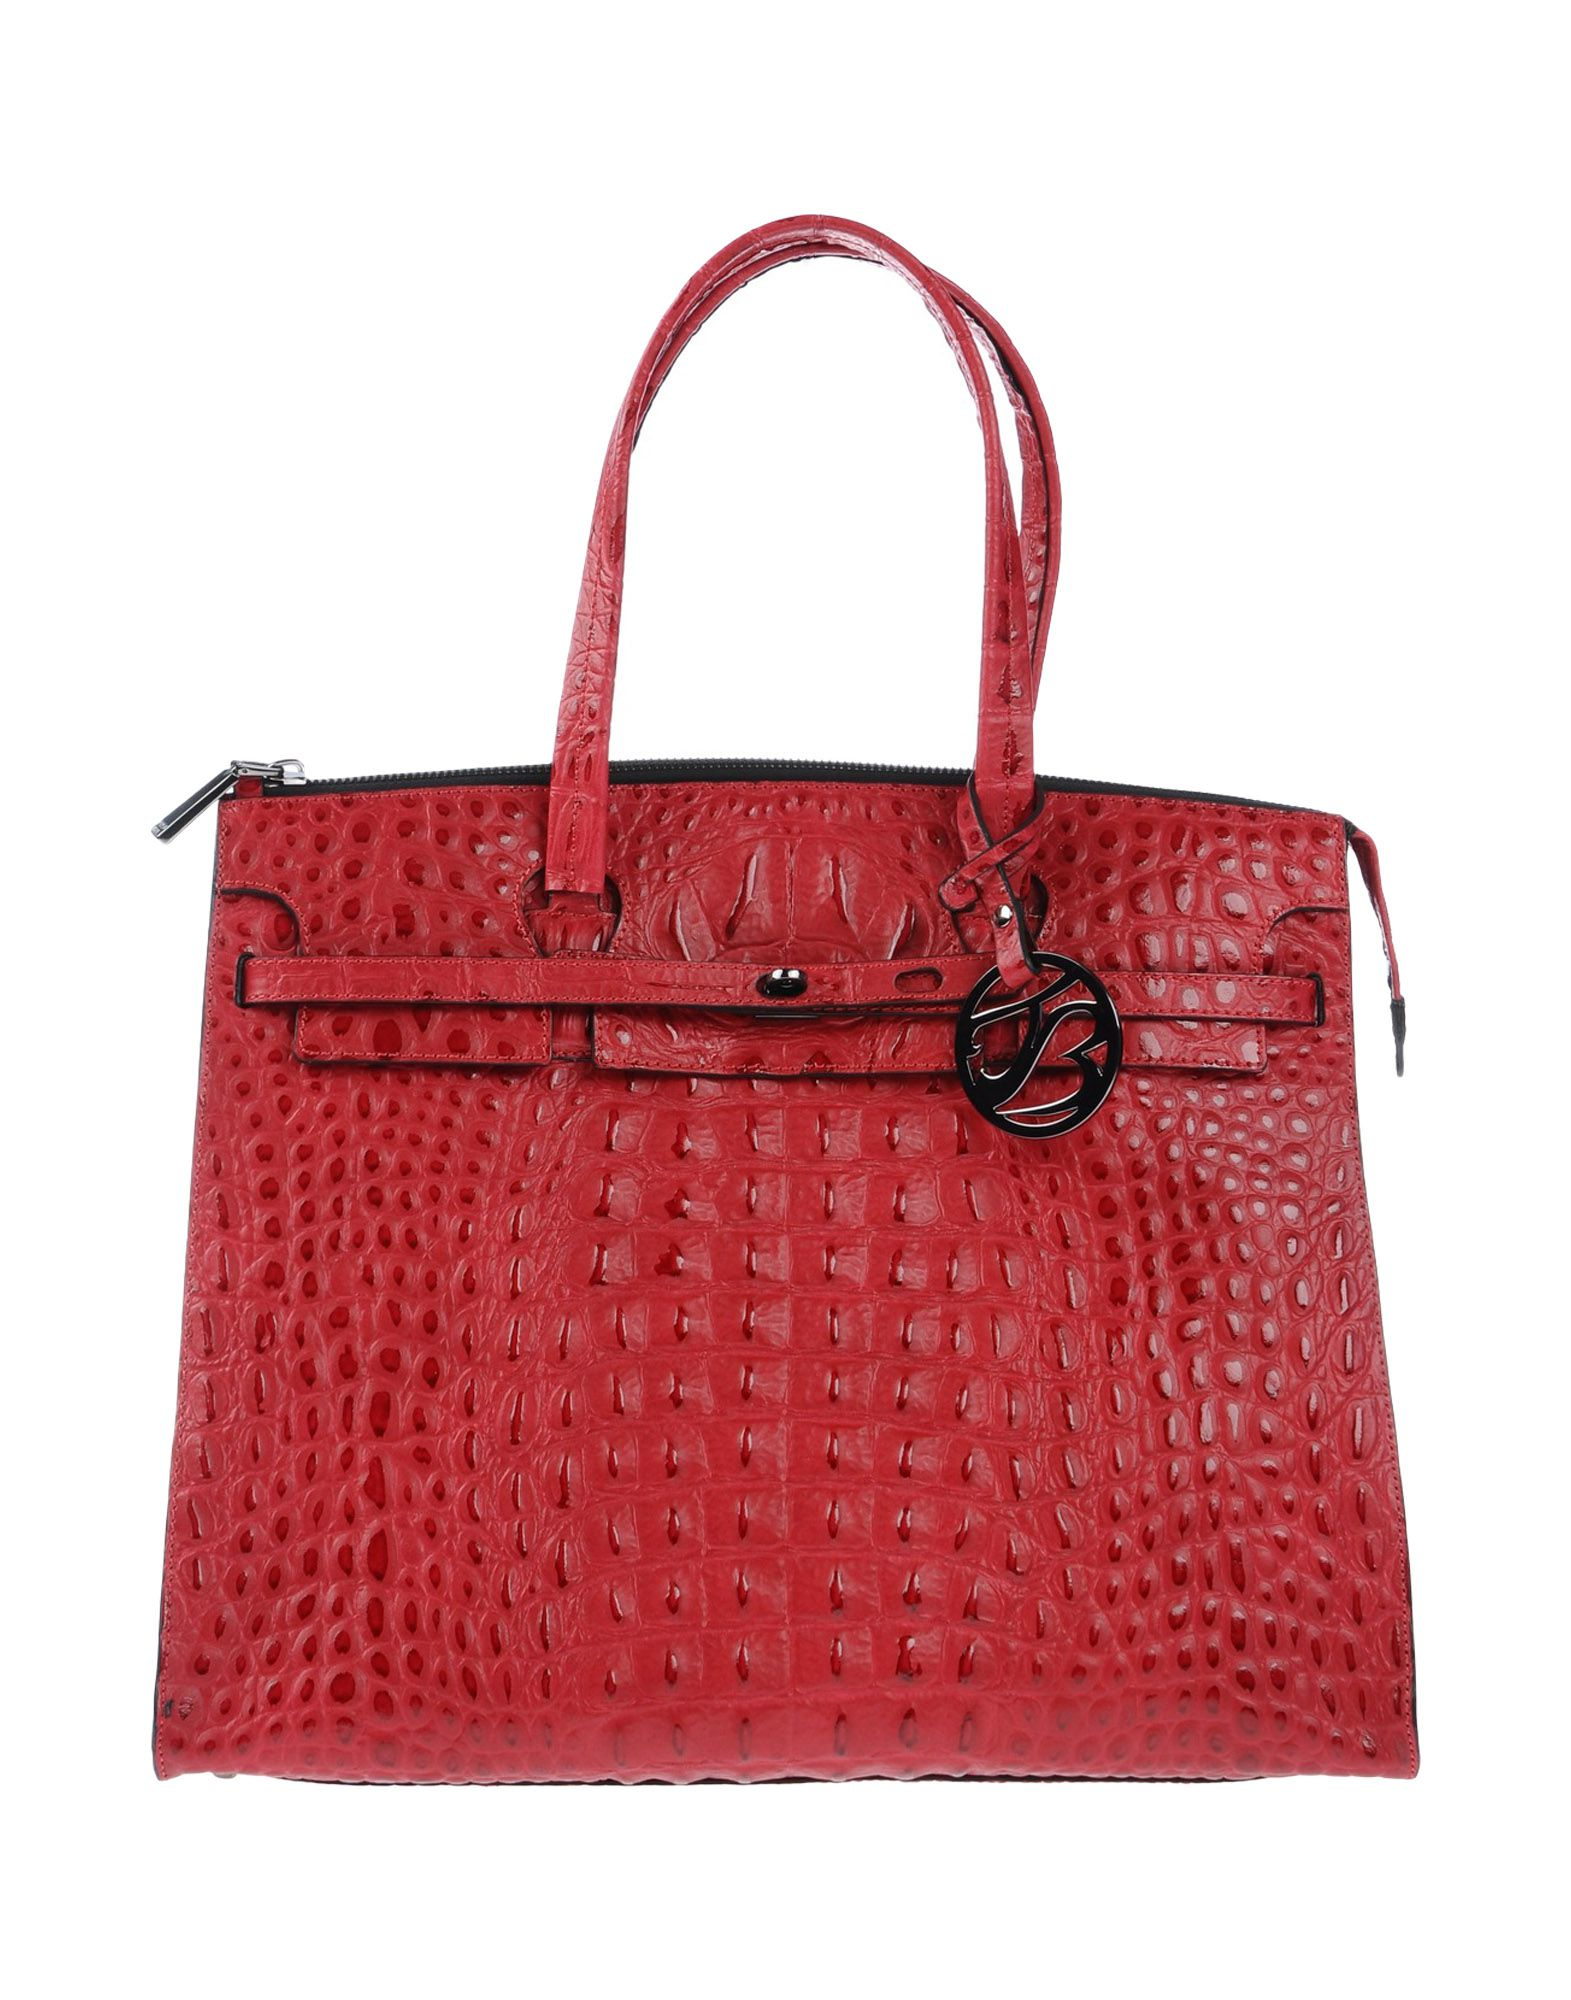 Lyst - Tosca Blu Handbag in Red